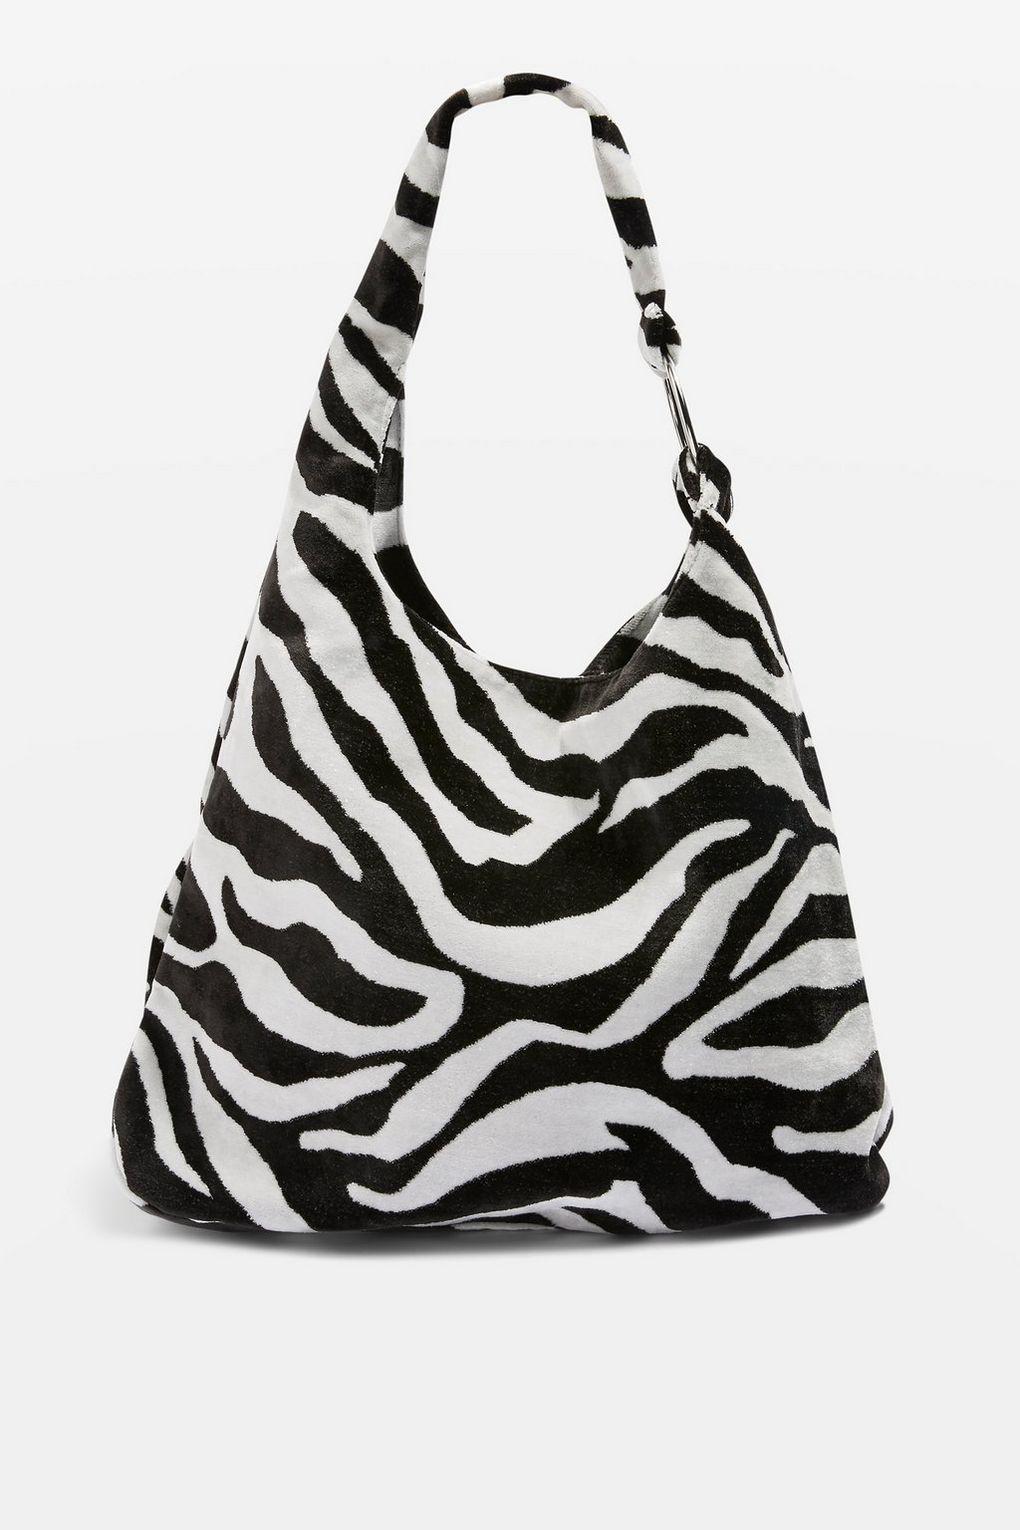 TOPSHOP Synthetic Kenya Zebra Print Tote Bag in Monochrome (Black) - Lyst